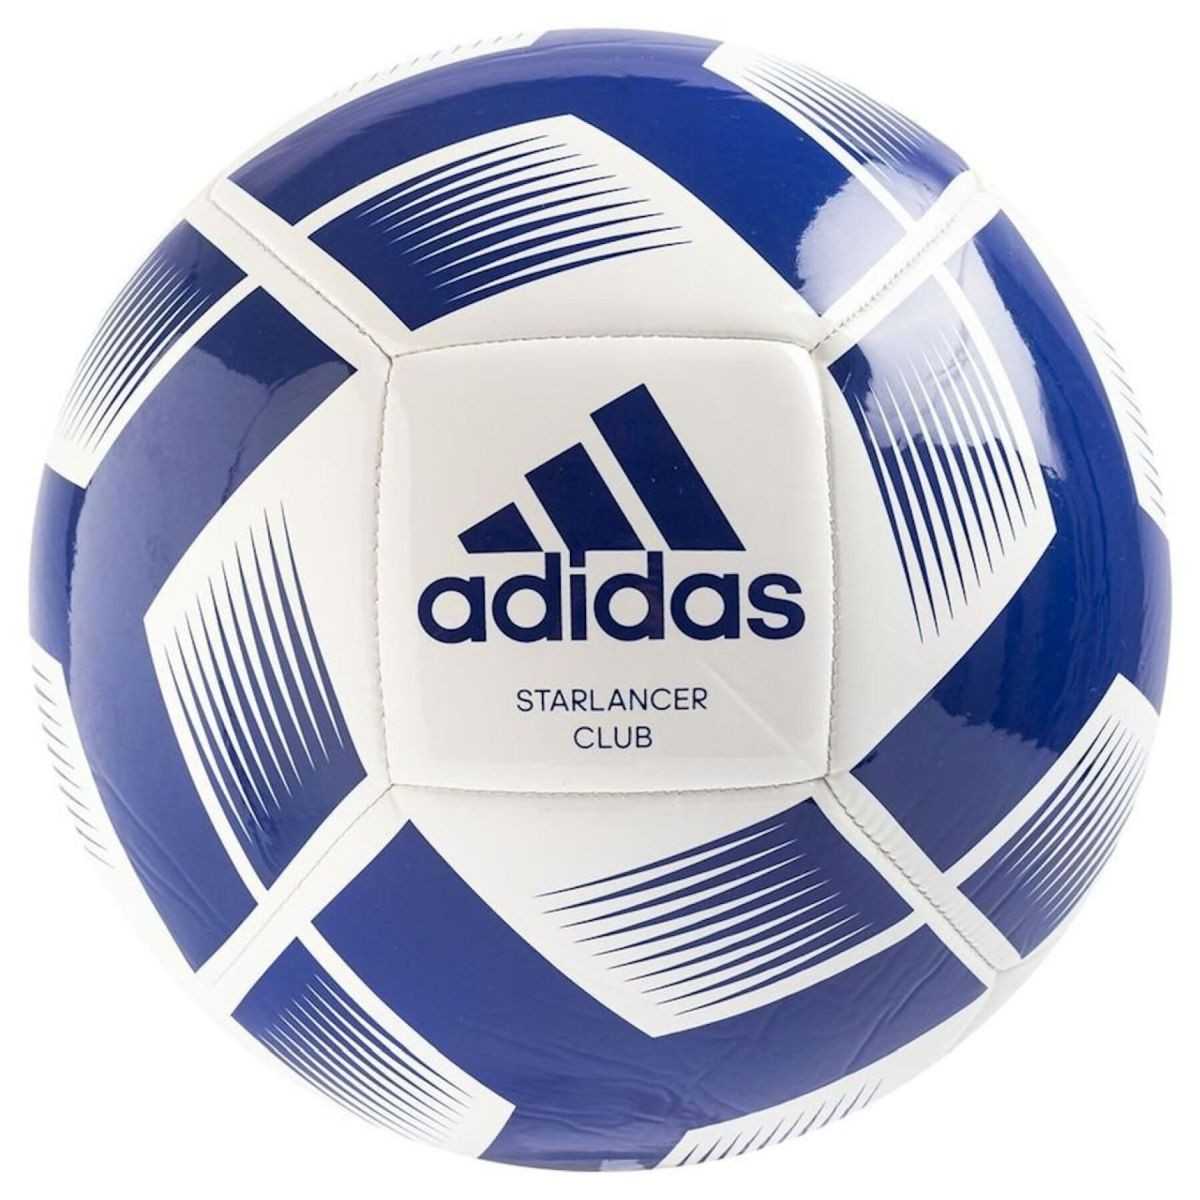 Adidas Starlancer Club futbolo kamuolys, 5